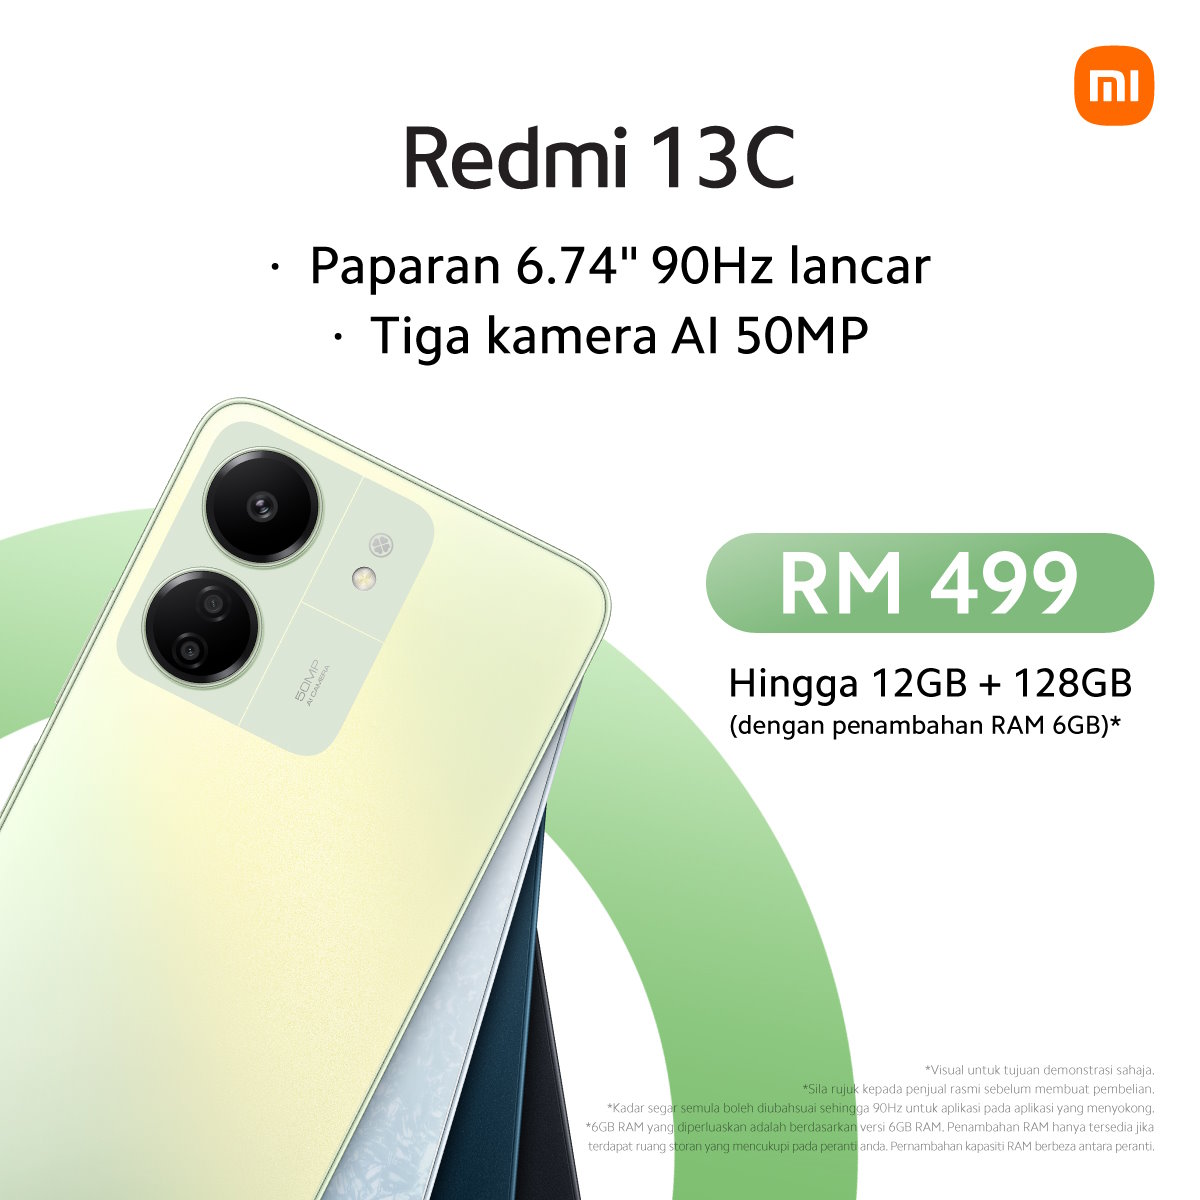 Xiaomi Redmi 13C - Full phone specifications